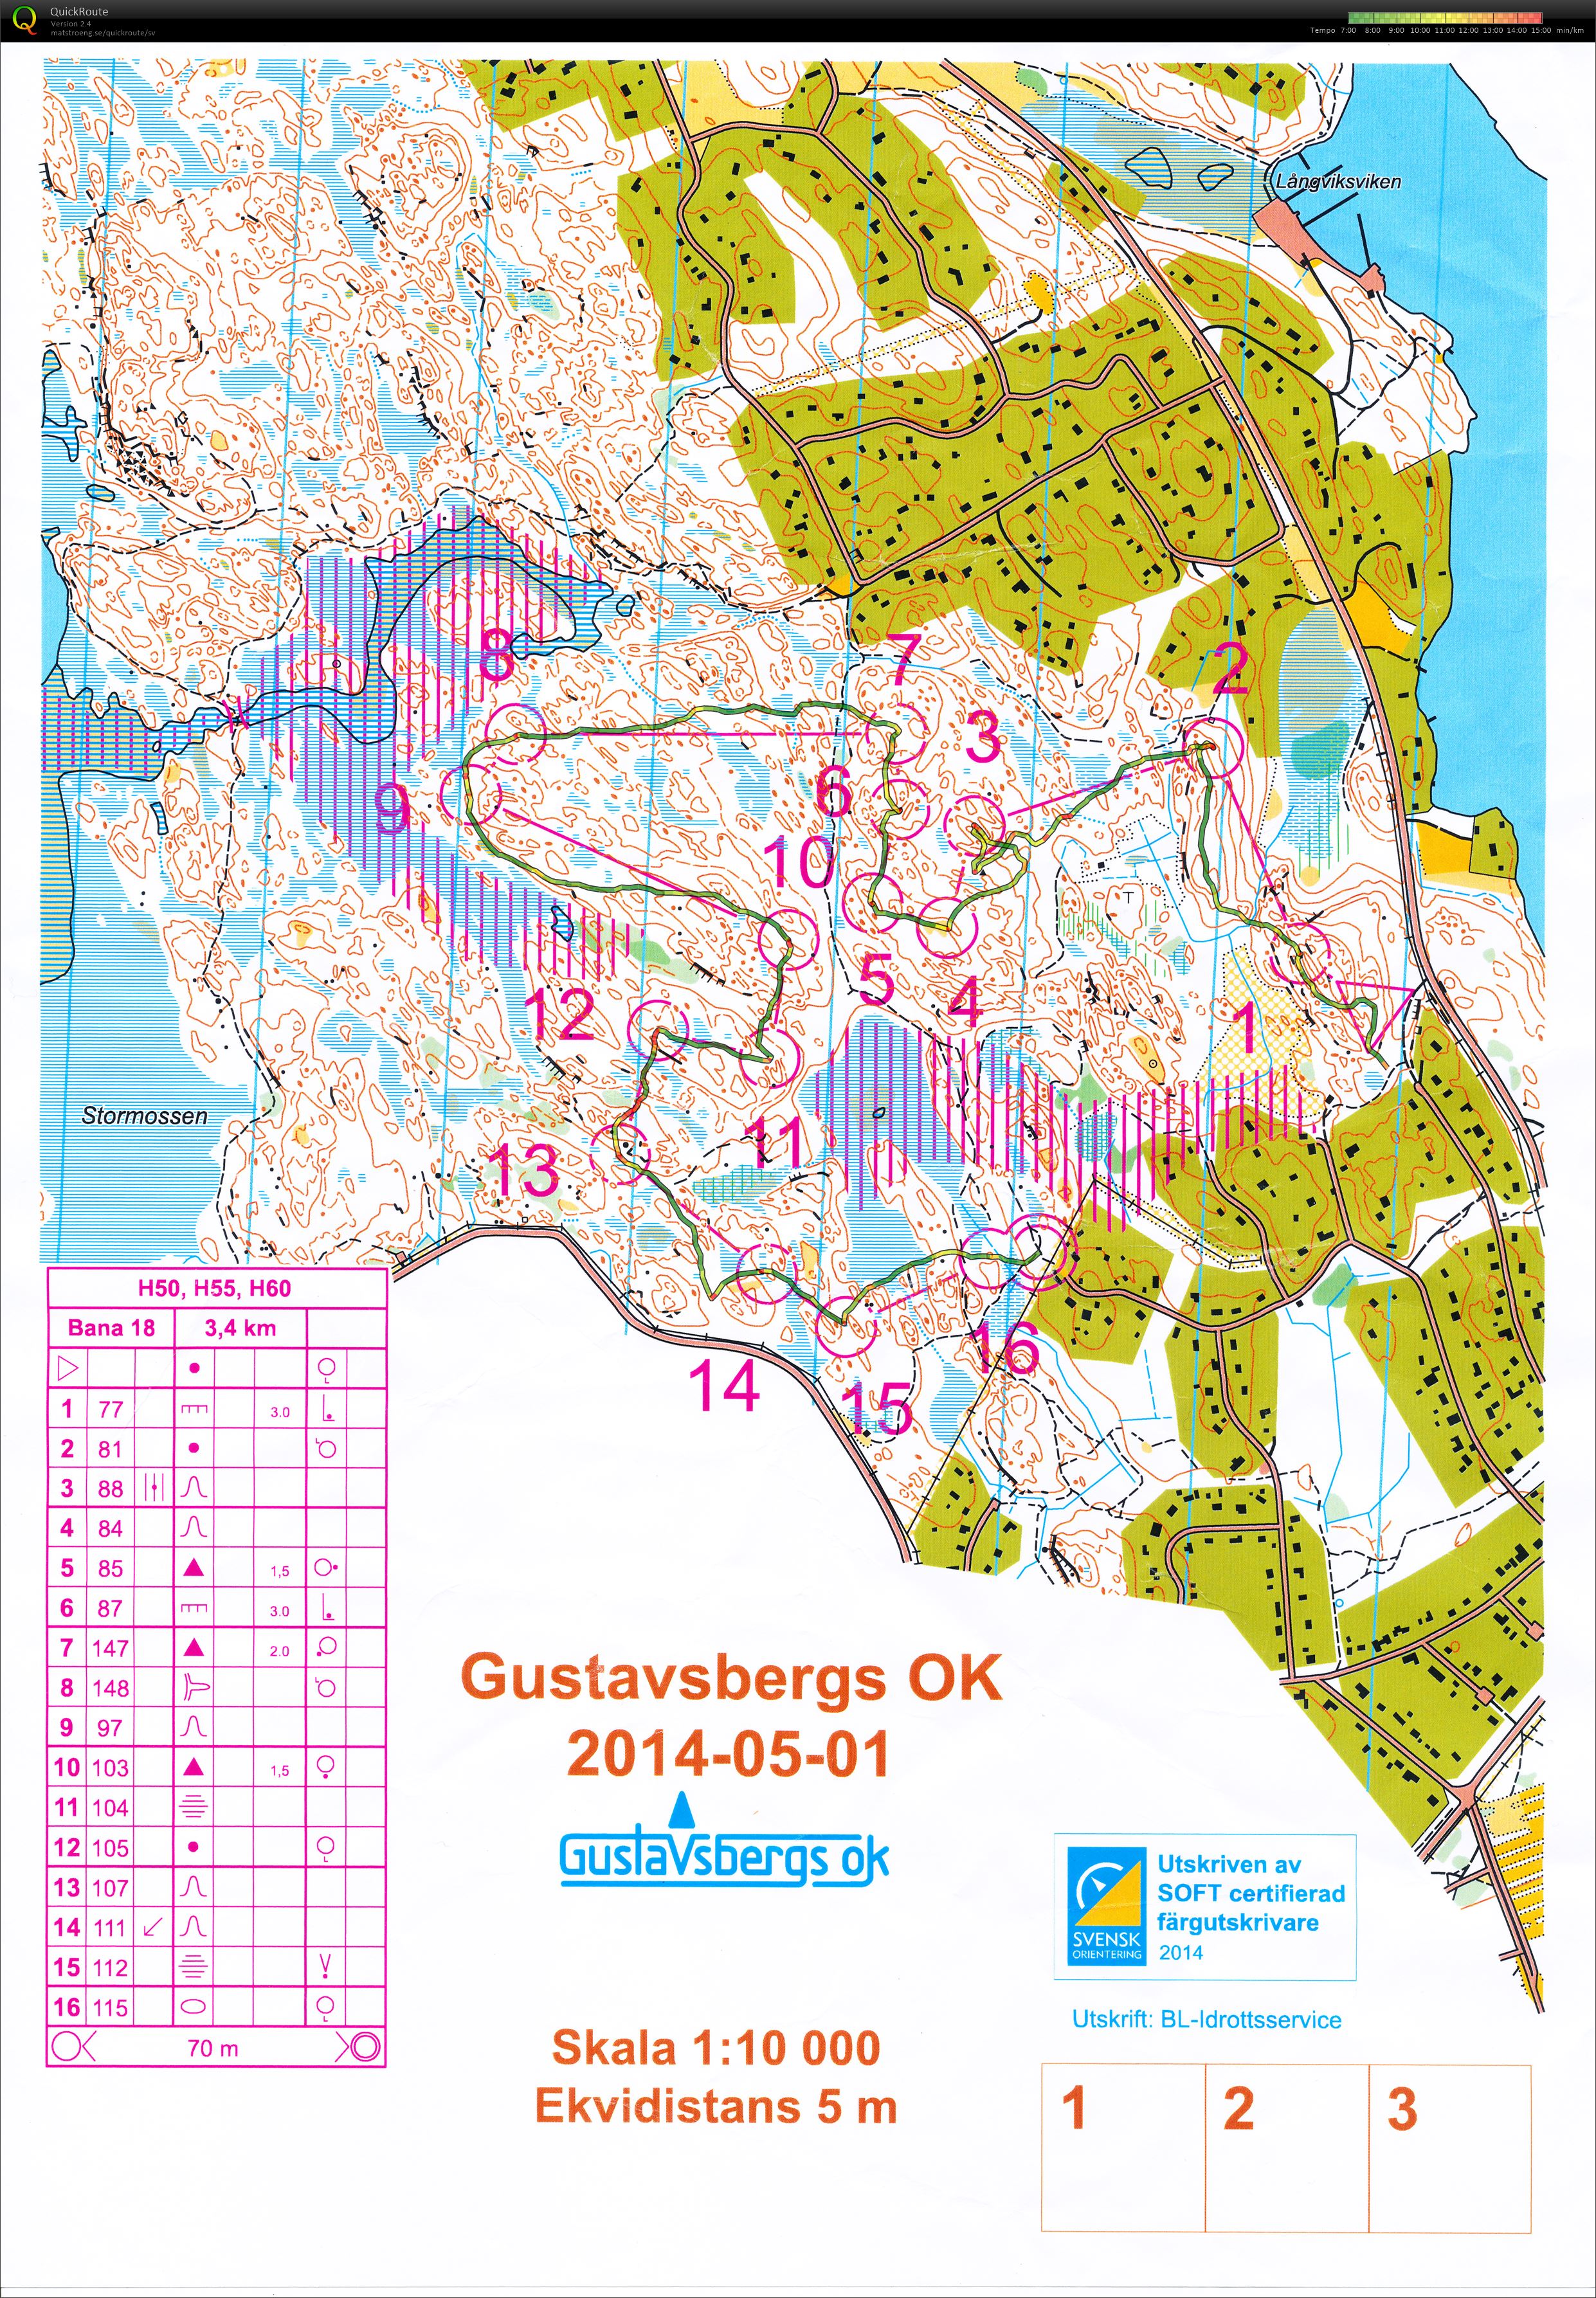 Gustavsbergs OK (2014-05-01)